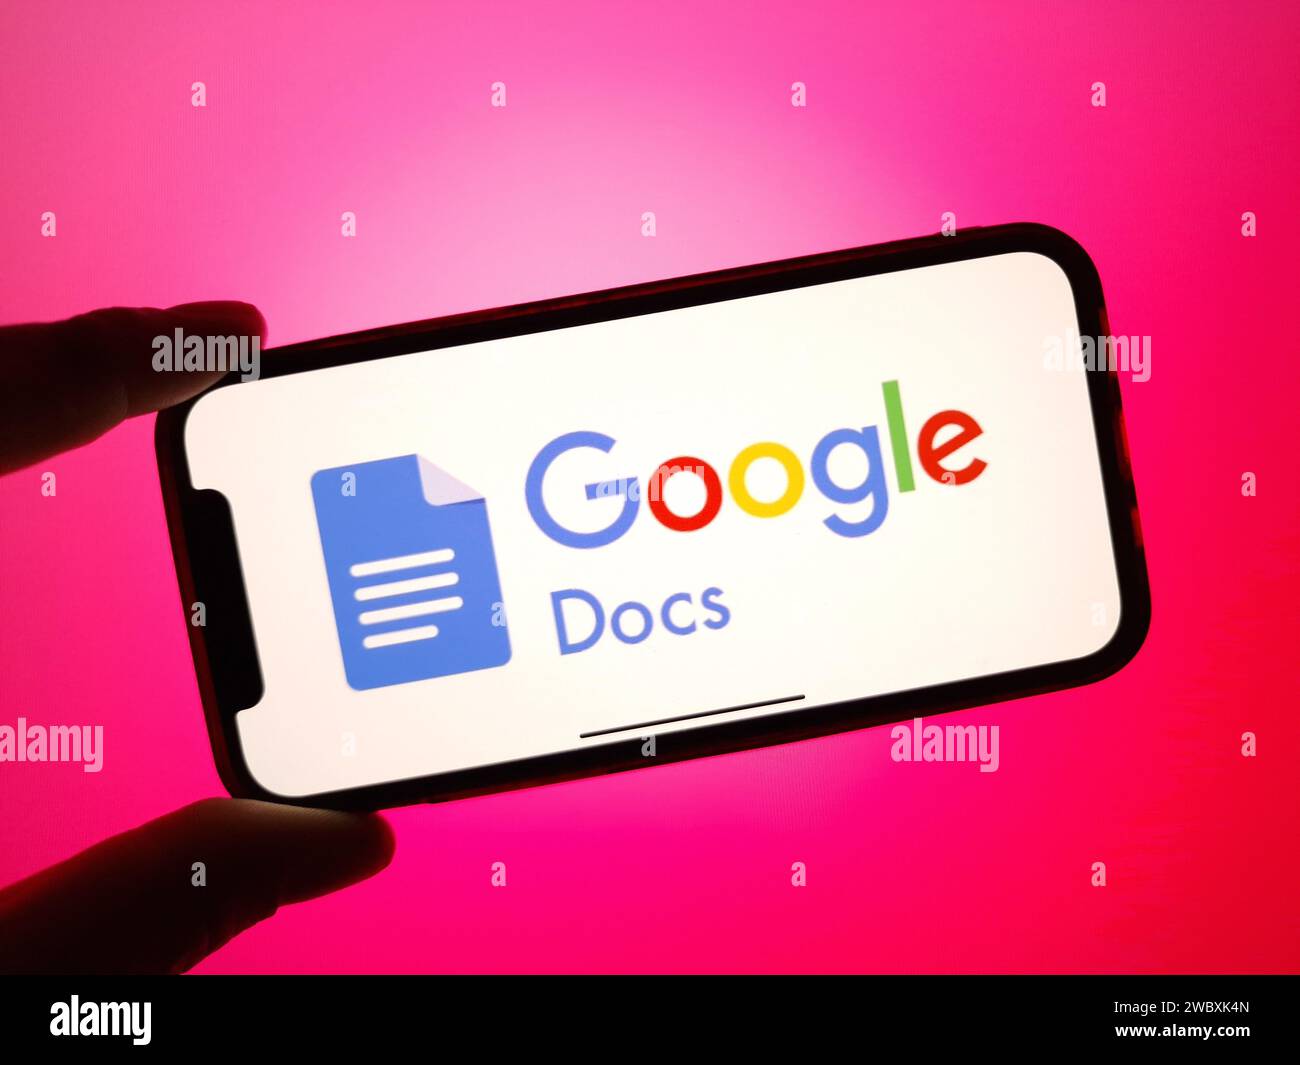 Konskie, Poland - January 12, 2024: Google Docs logo displayed on mobile phone screen Stock Photo